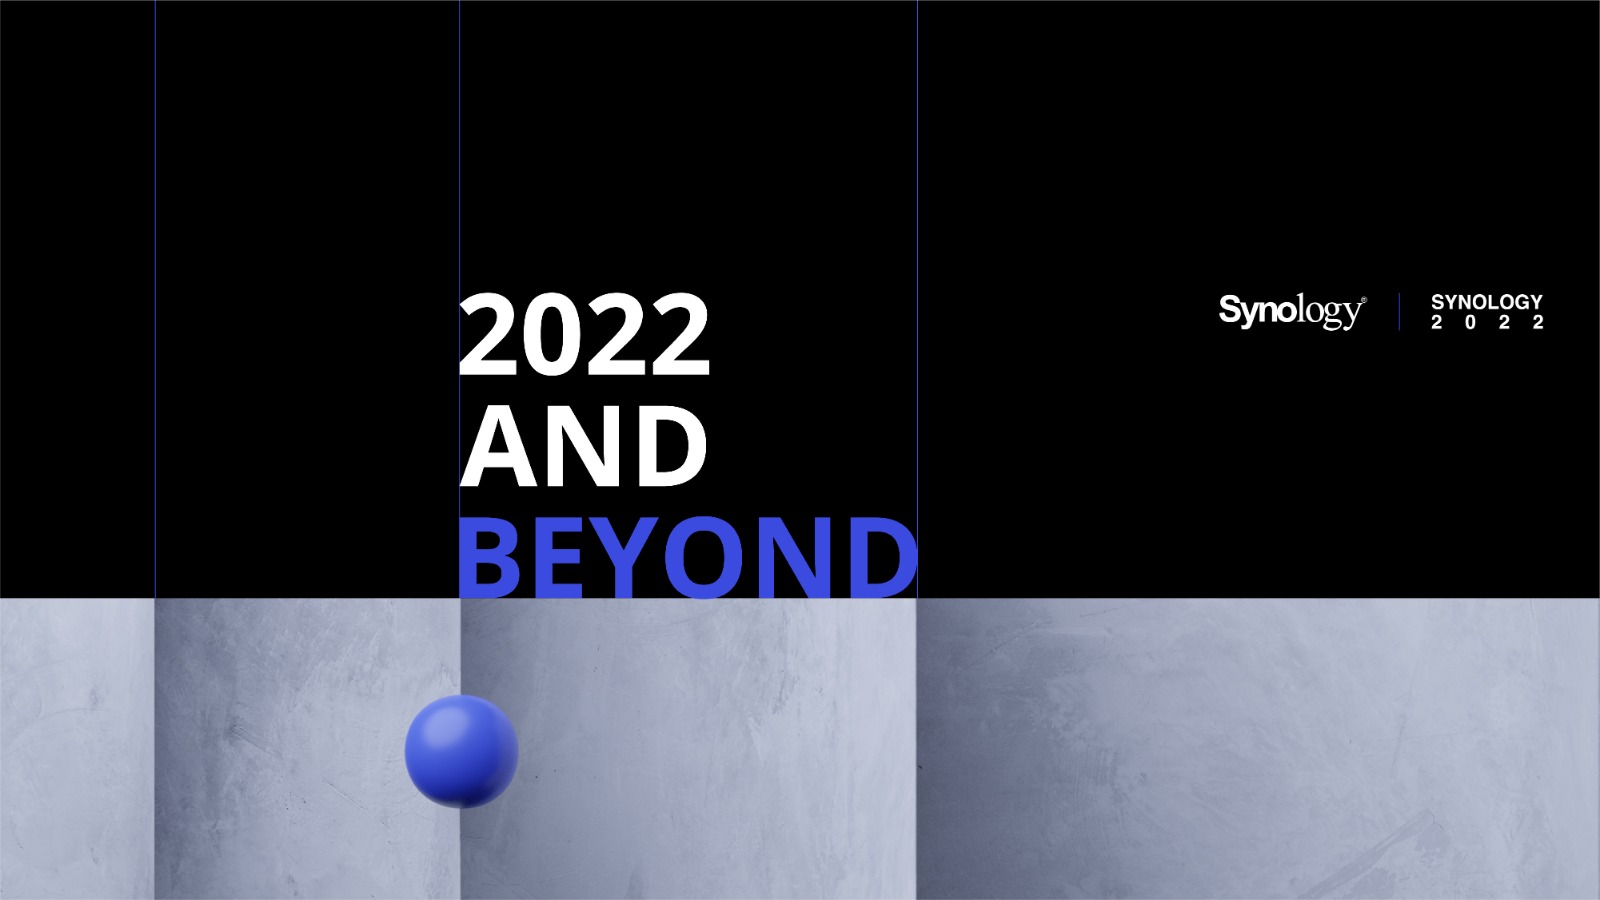 Synology 2022 AND BEYOND – Inovația nu se oprește niciodată